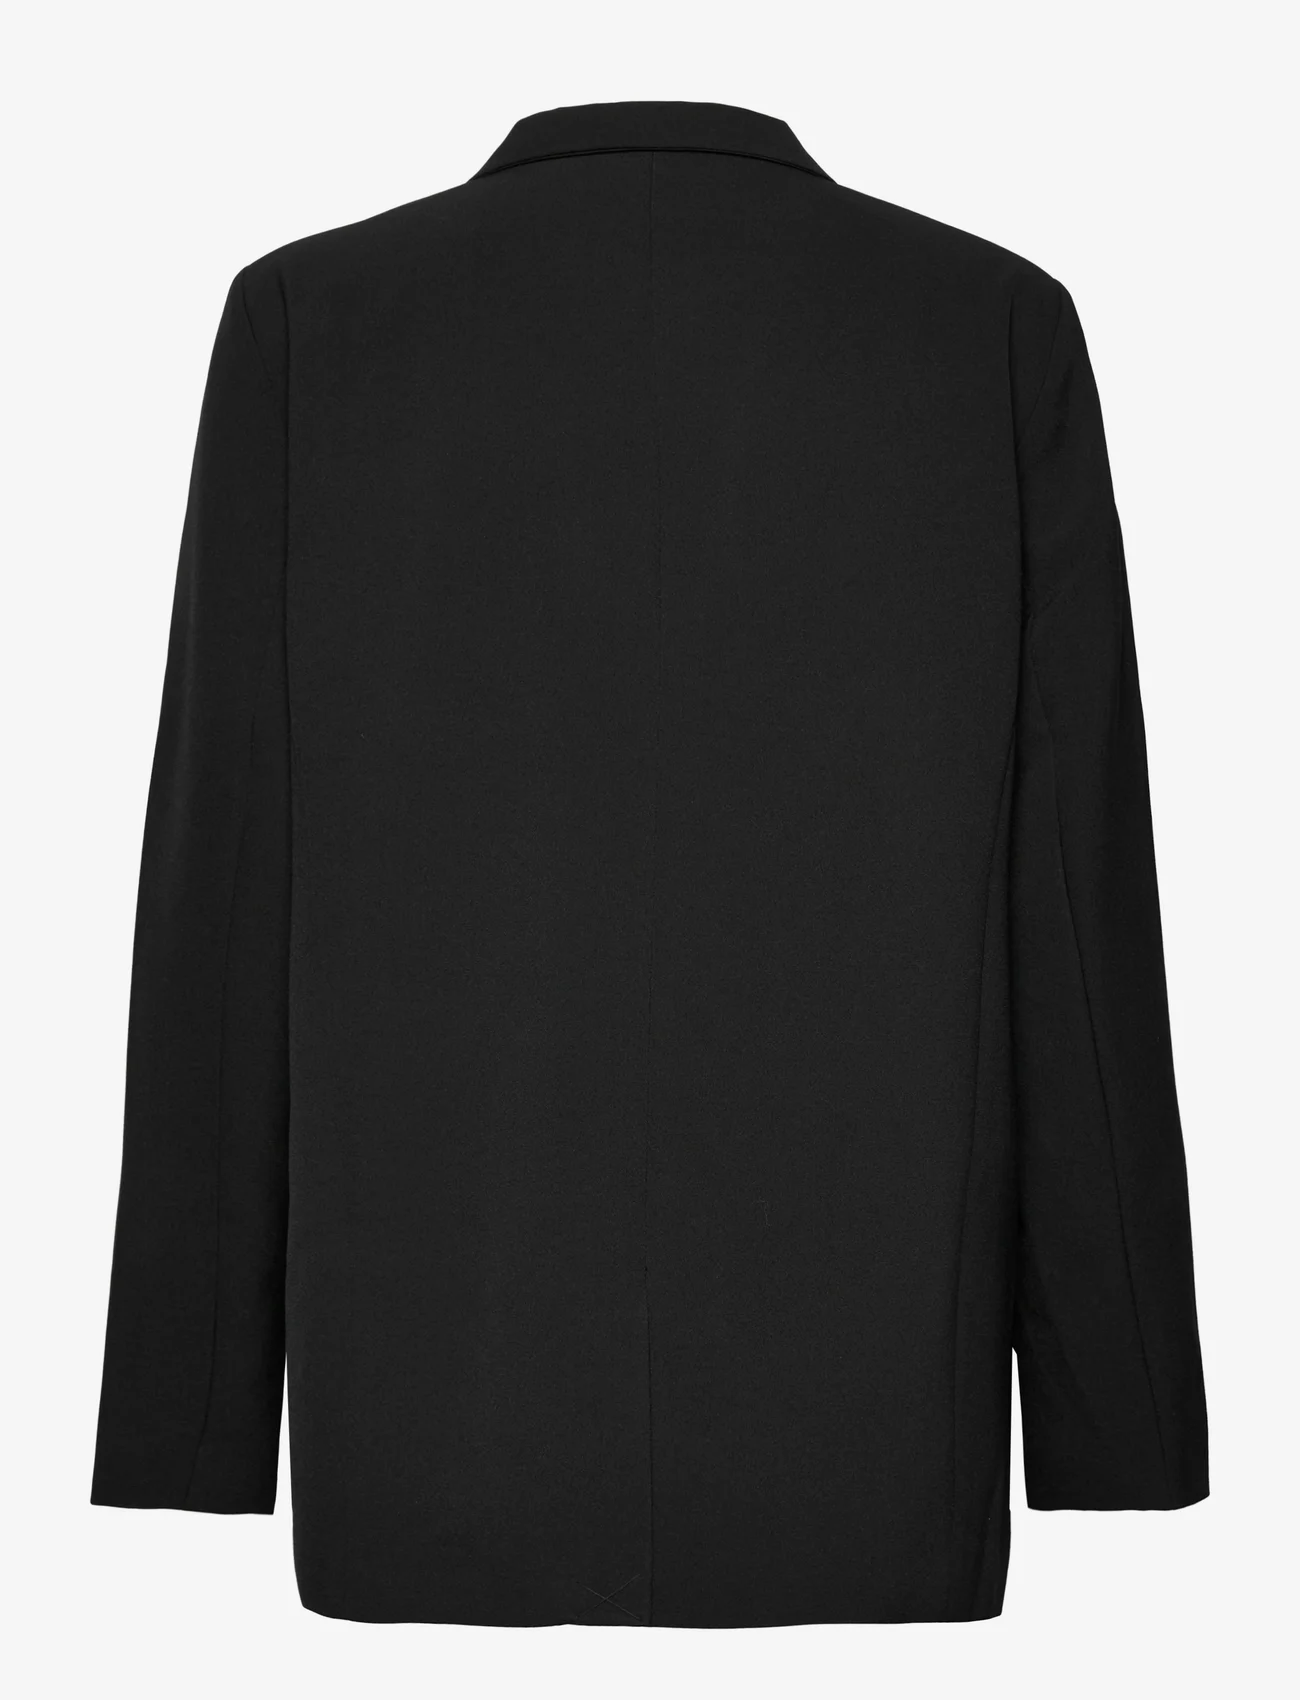 My Essential Wardrobe - 27 THE TAILORED BLAZER - feestelijke kleding voor outlet-prijzen - black - 1